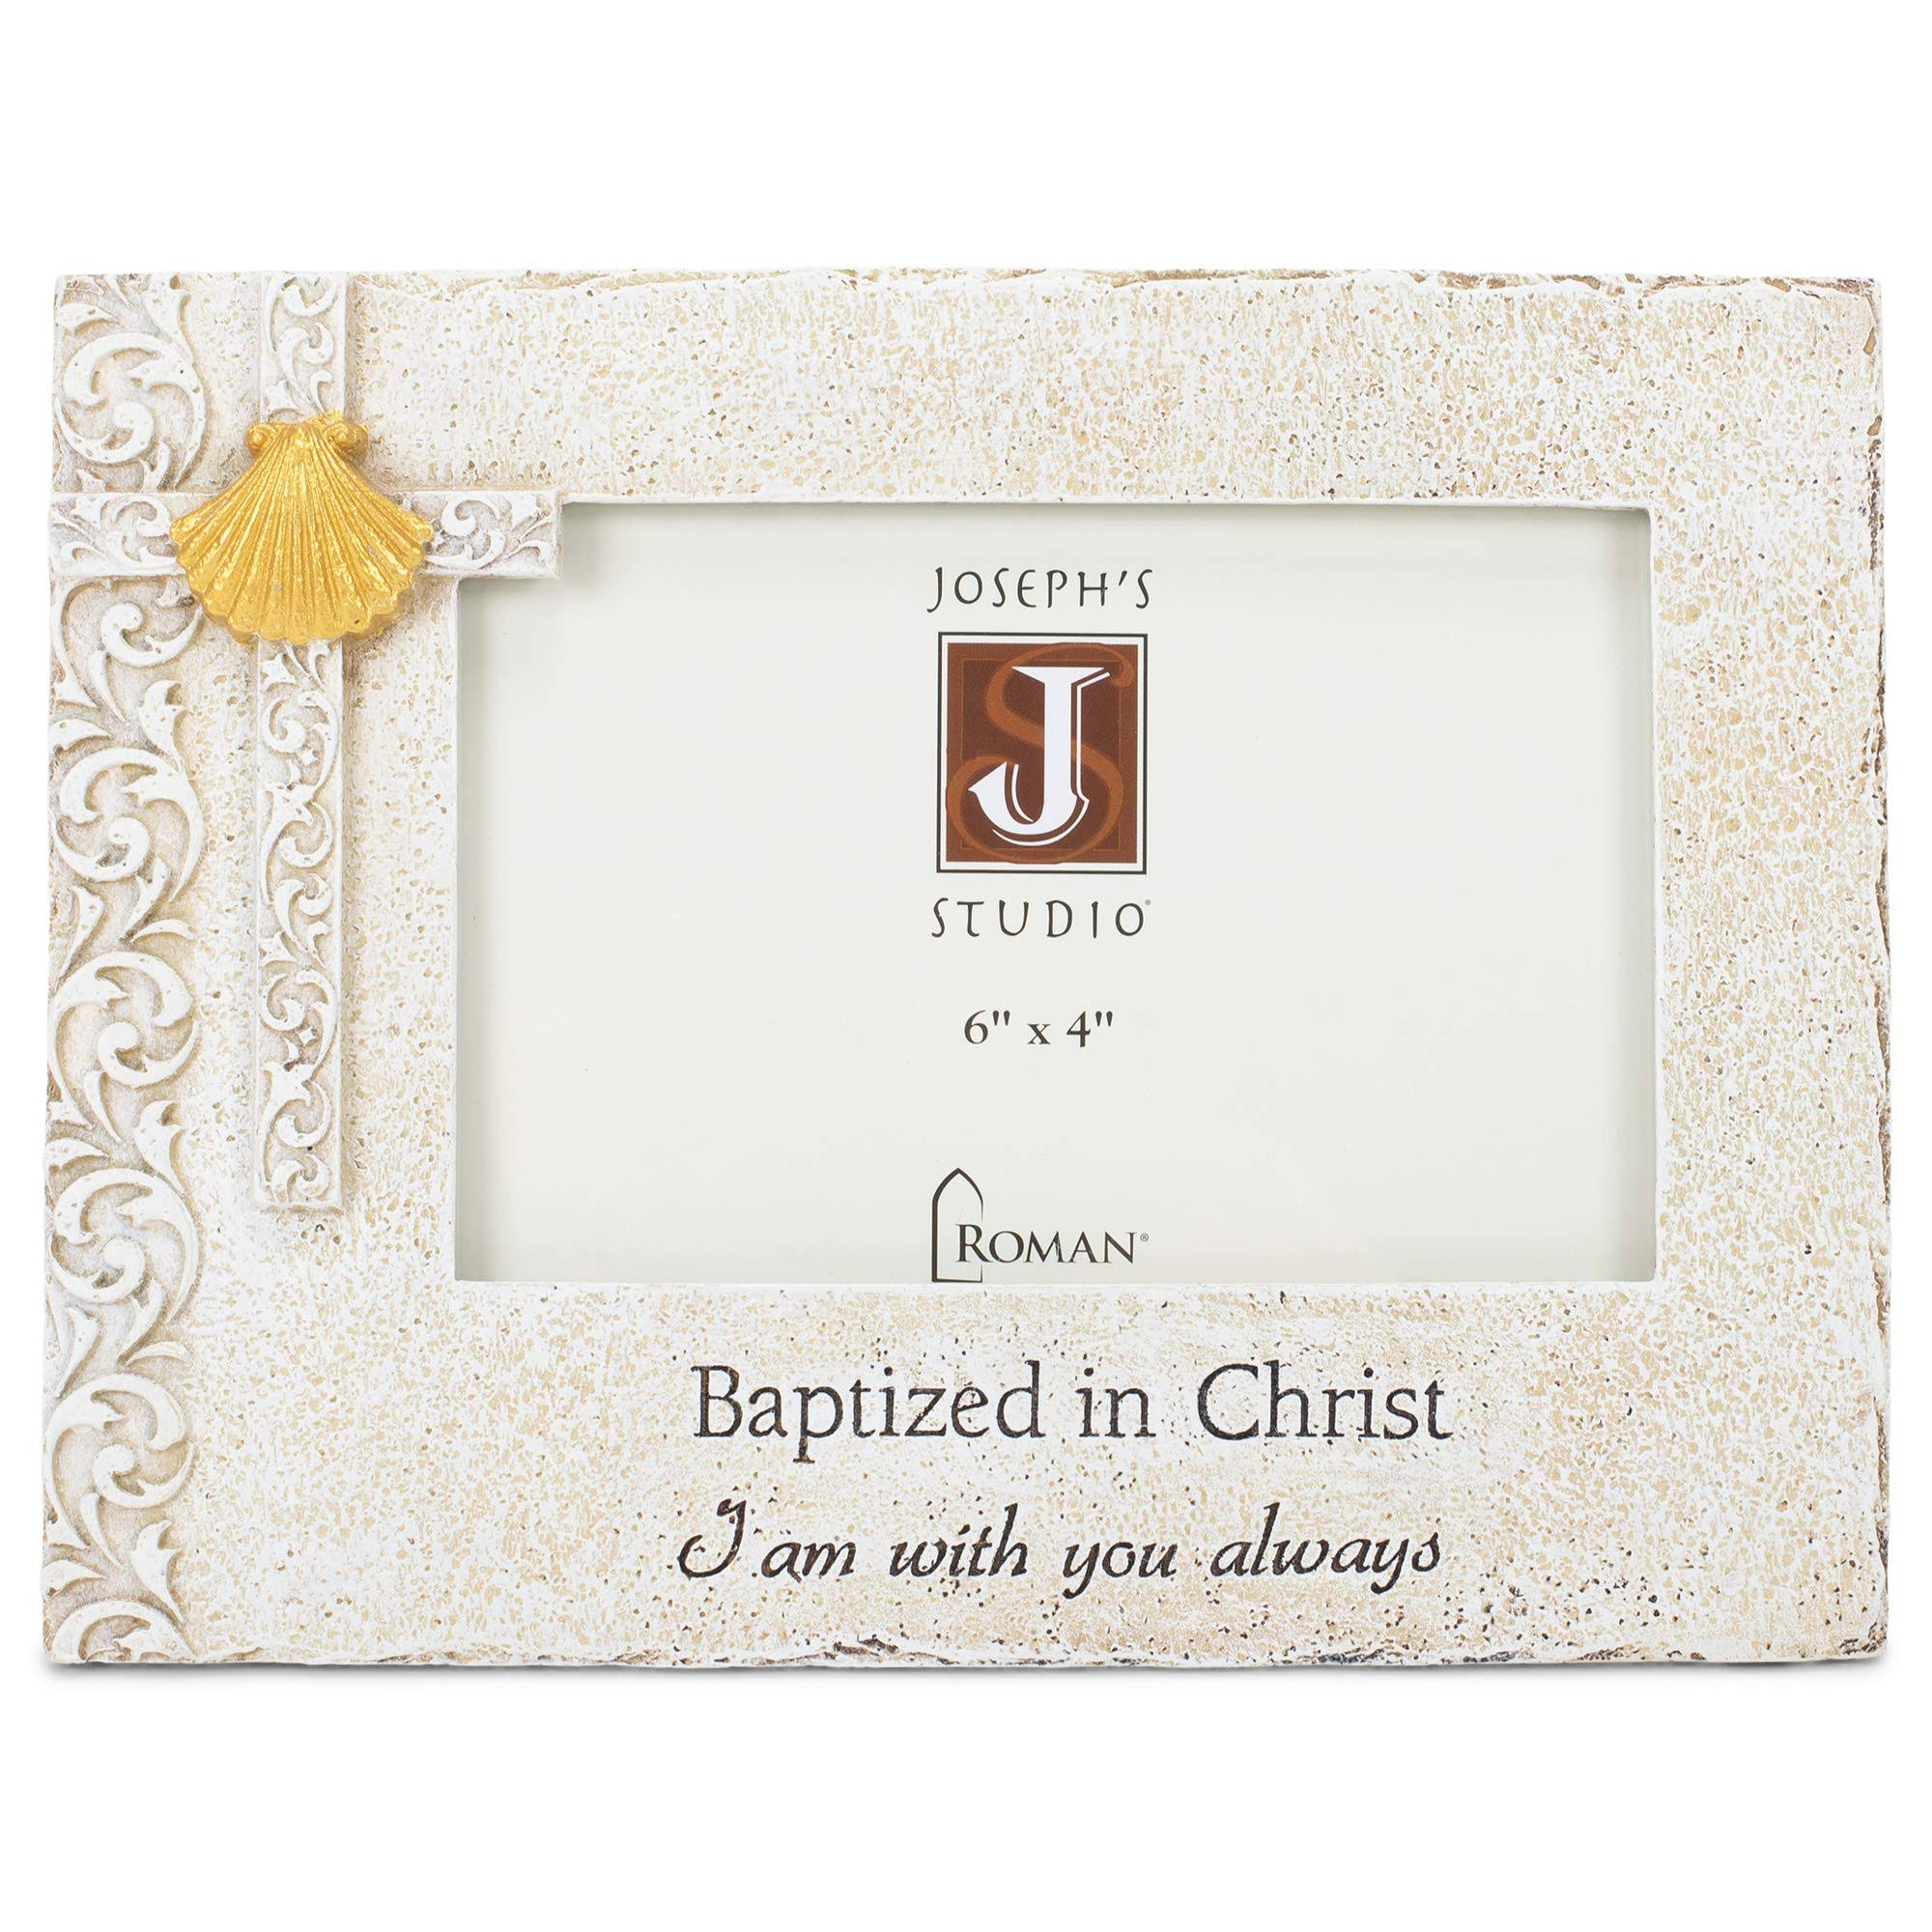 Roman Baptized in Christ Filigree Cream 6.75 x 4 Lead Free Zinc Alloy Decorative Picture Frame